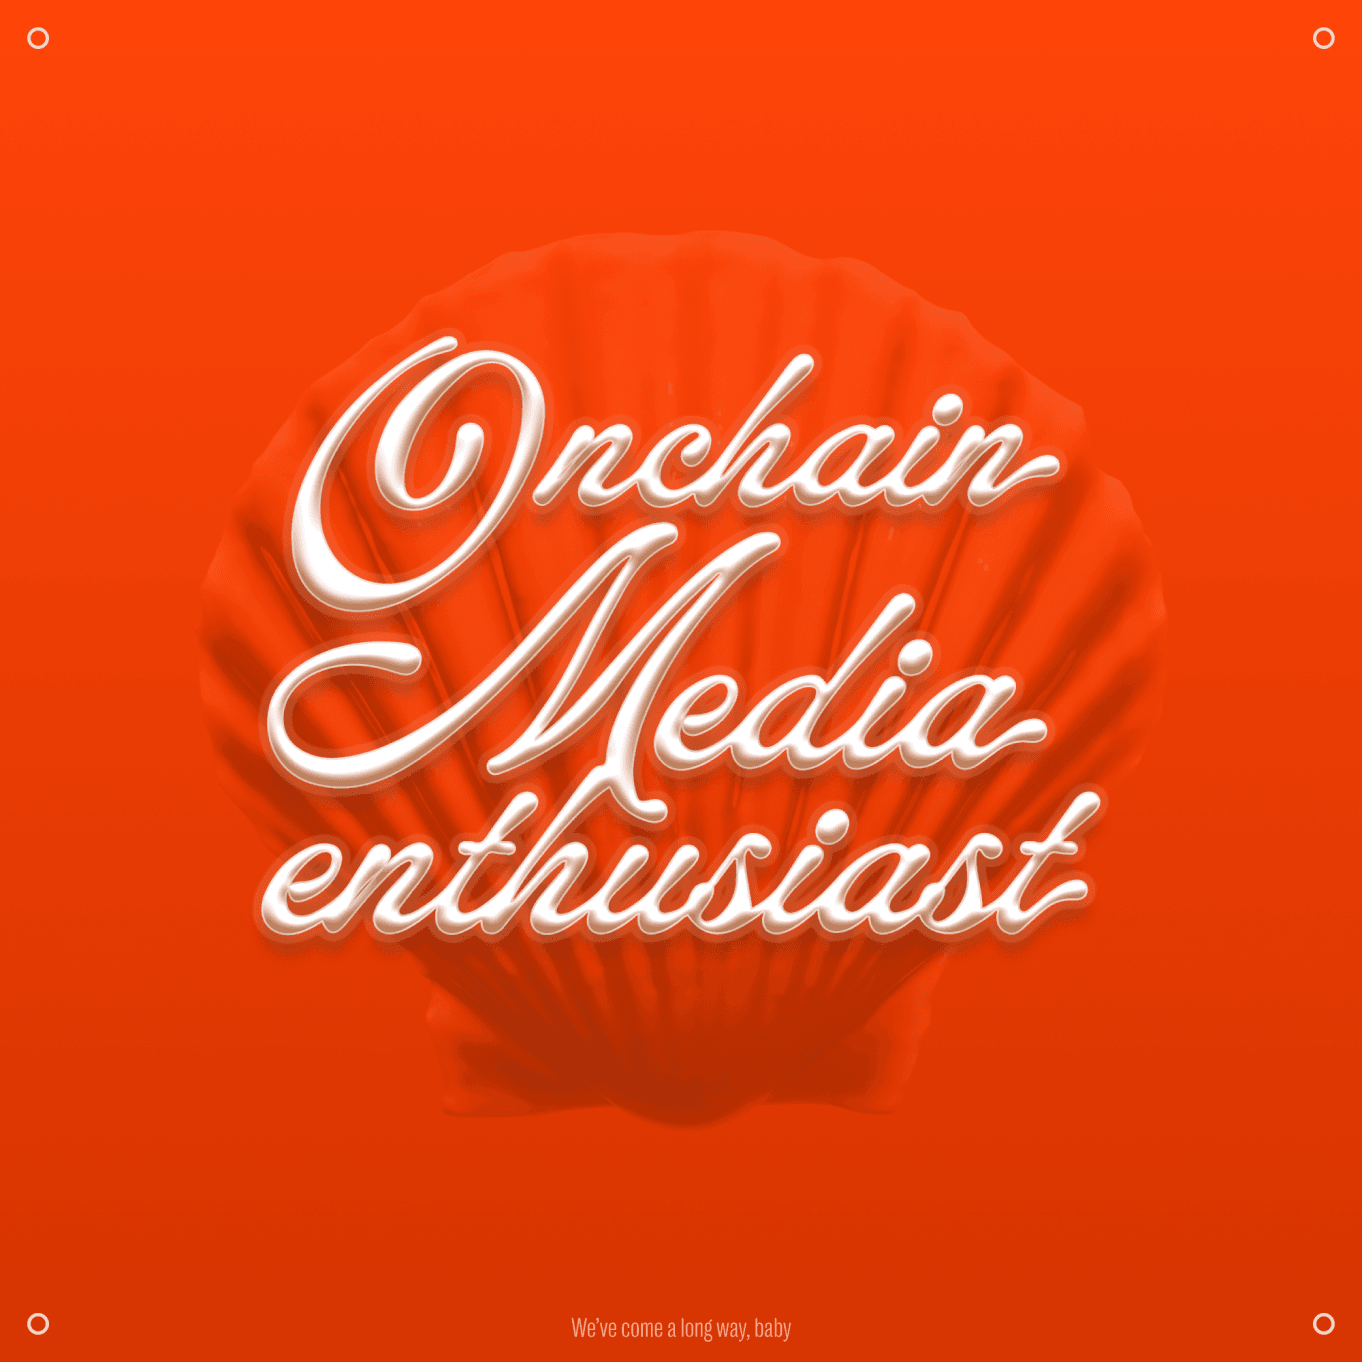 Onchain Media Enthusiast 122